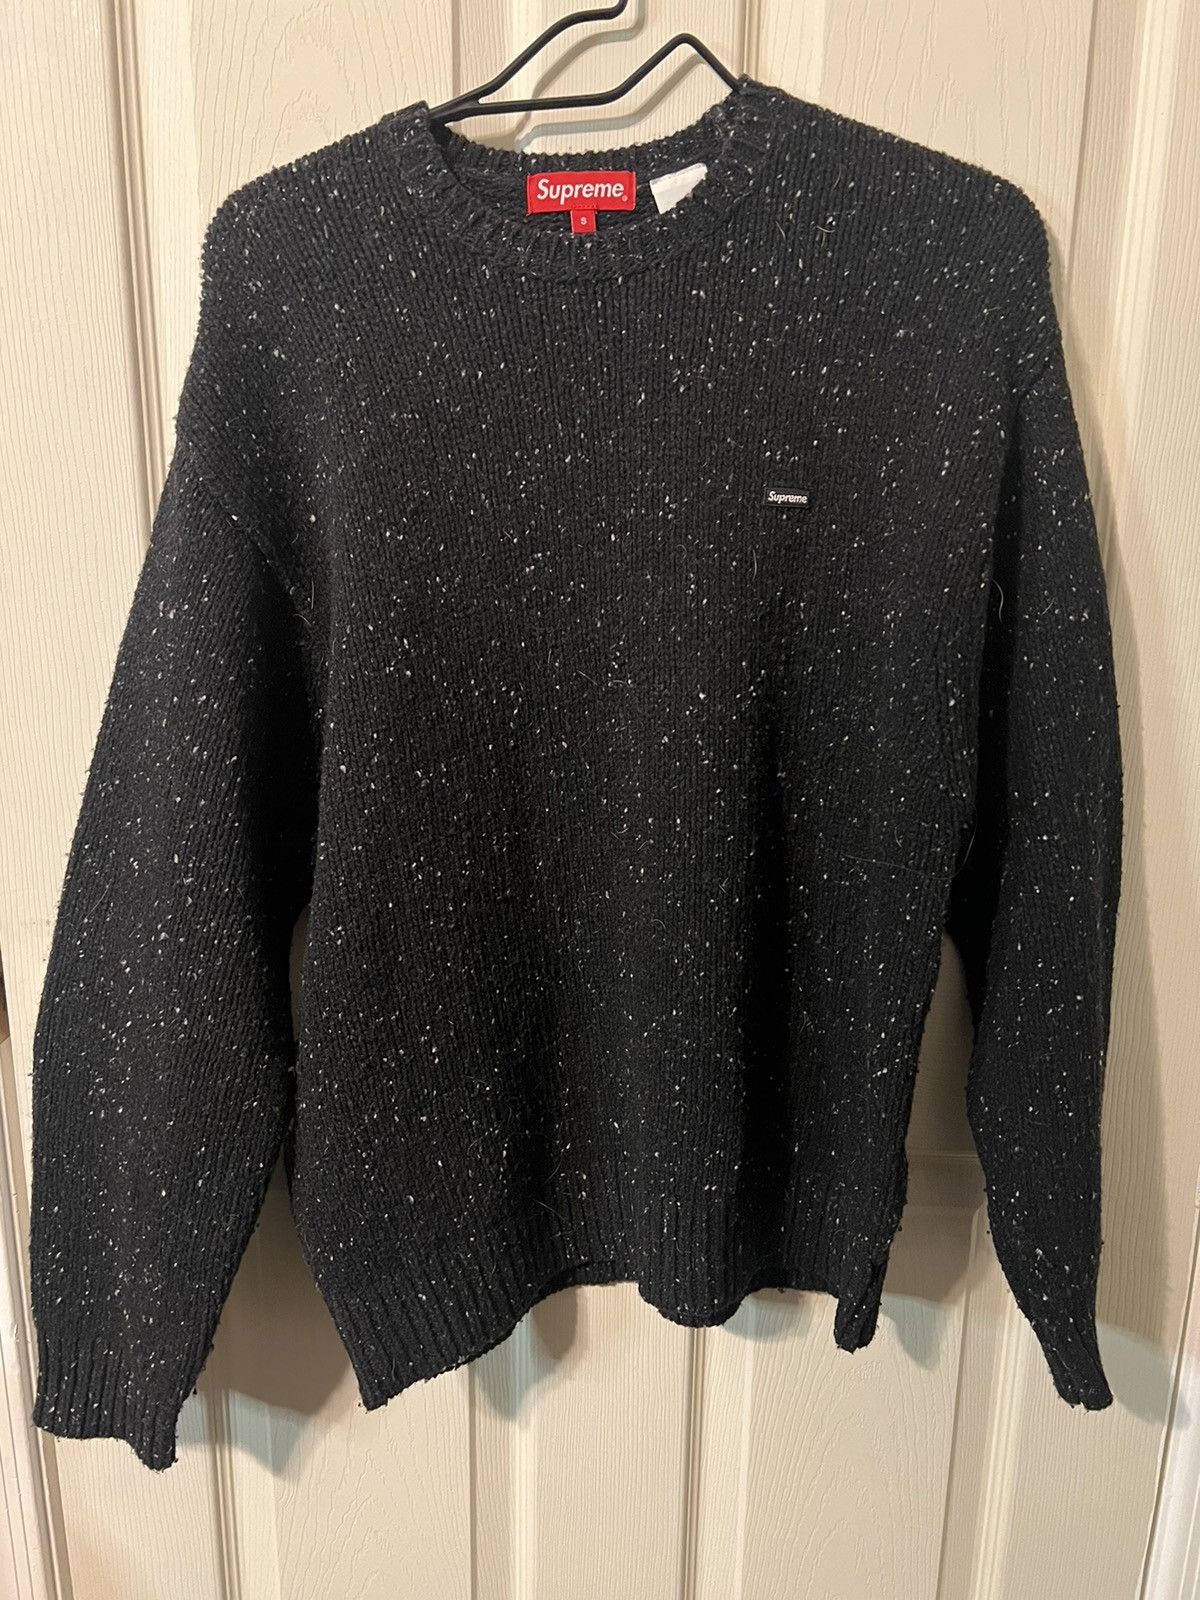 Supreme Small Box Speckle Sweater Royal